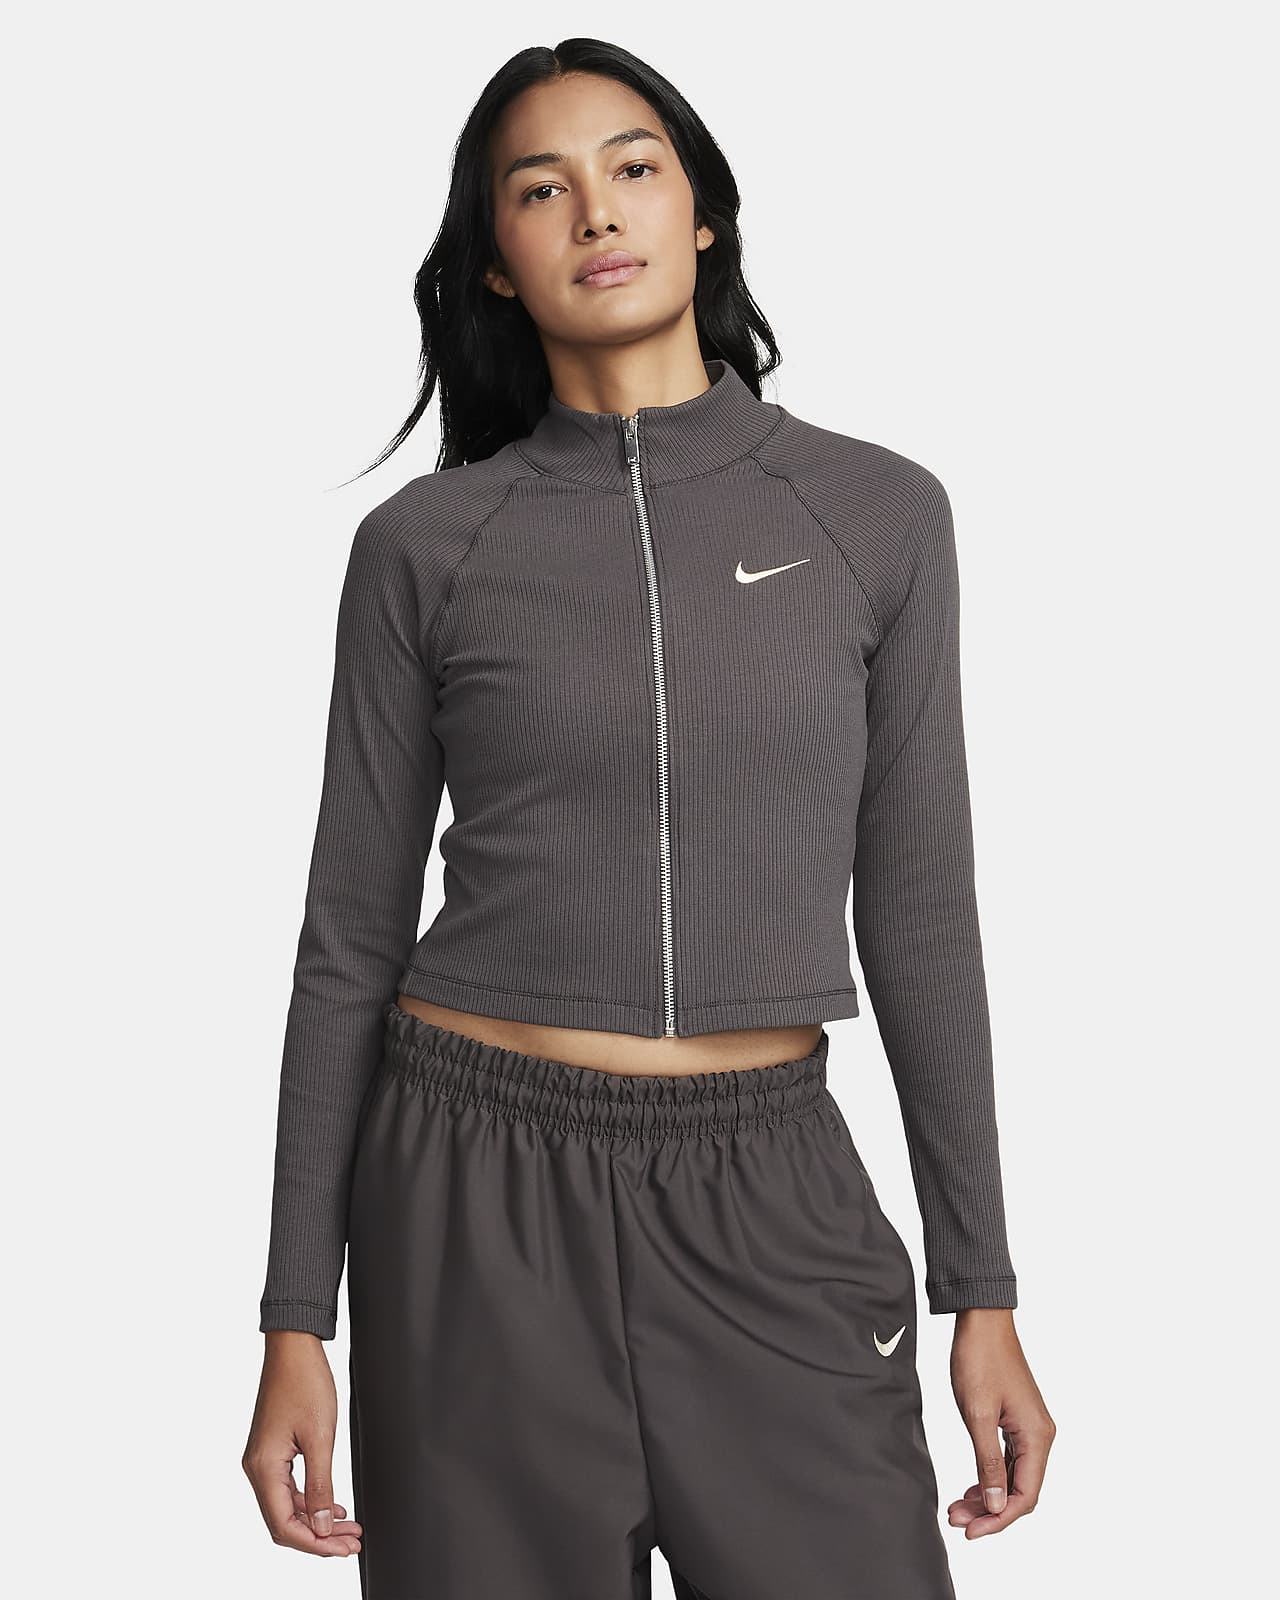 Survêtement Nike Sportswear pour Fille